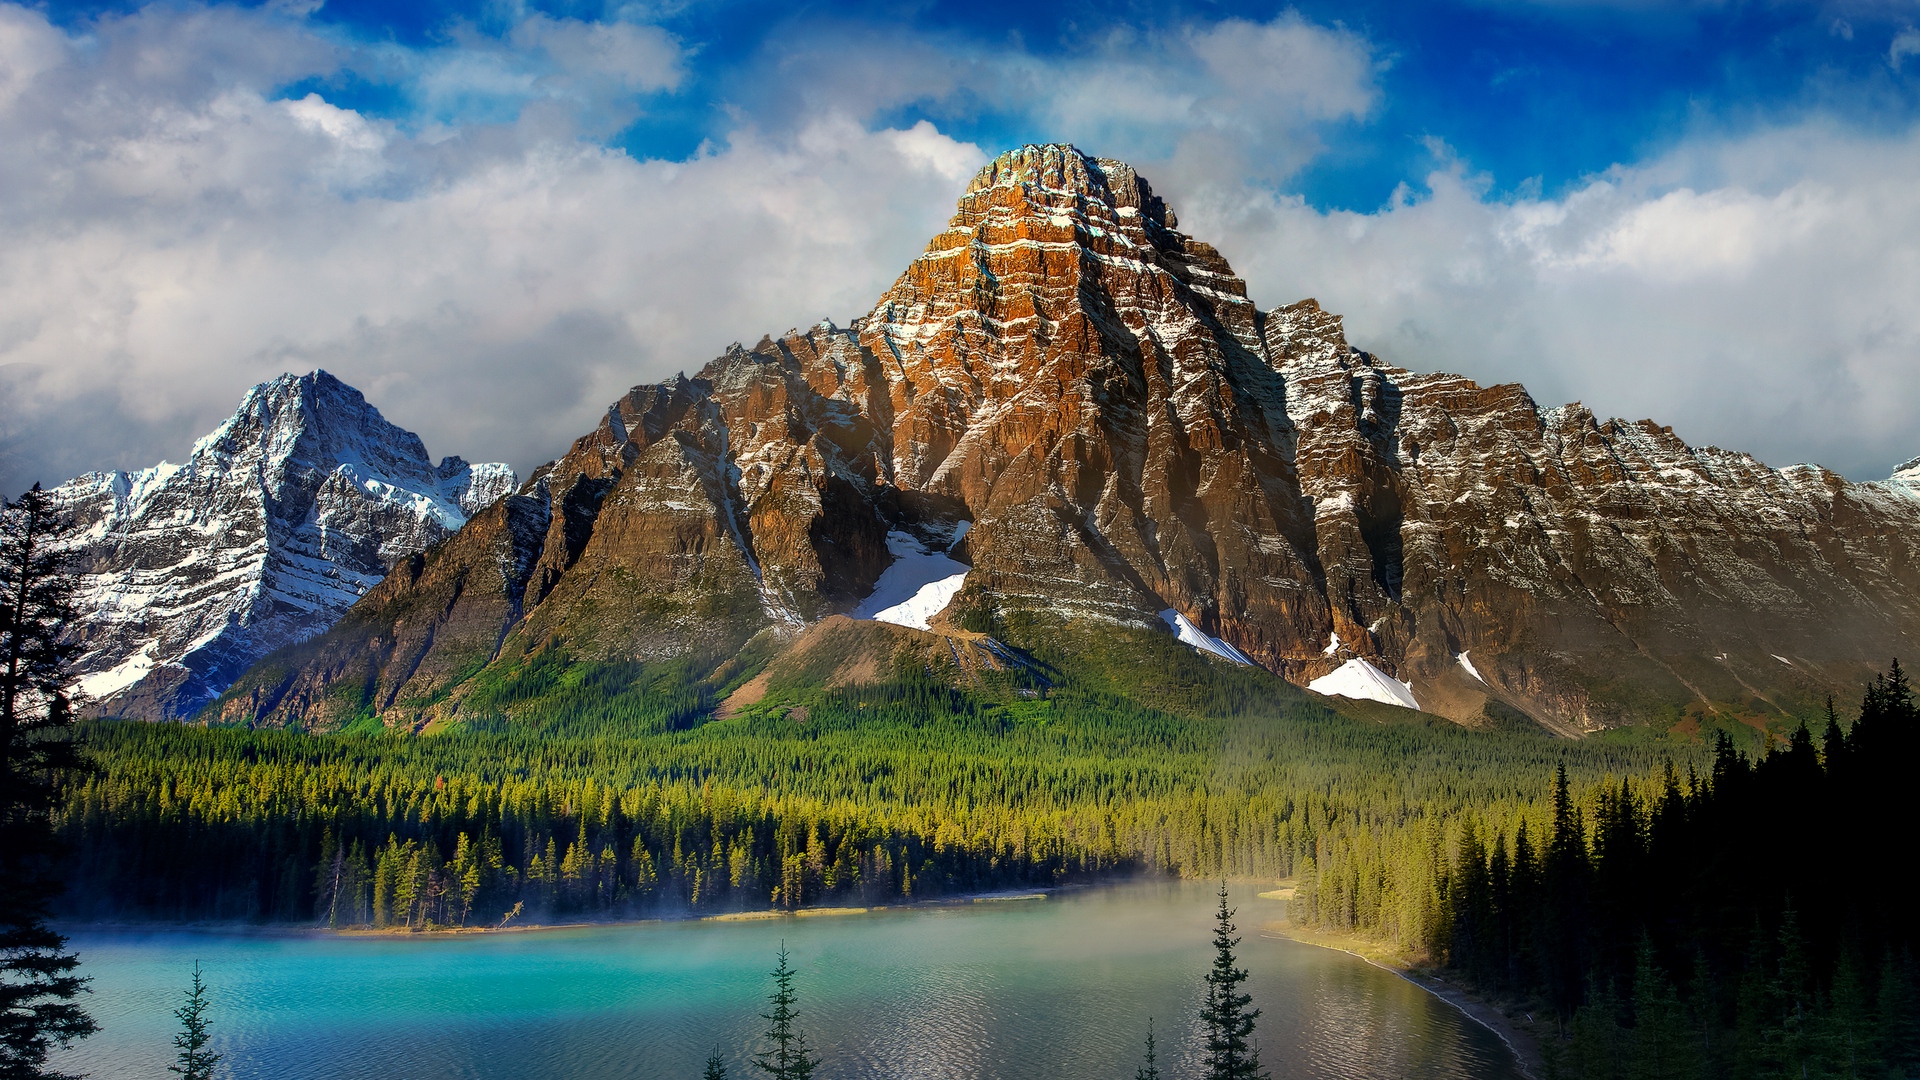 Download wallpaper 1920x1080 beautiful scenery, mountains, lake